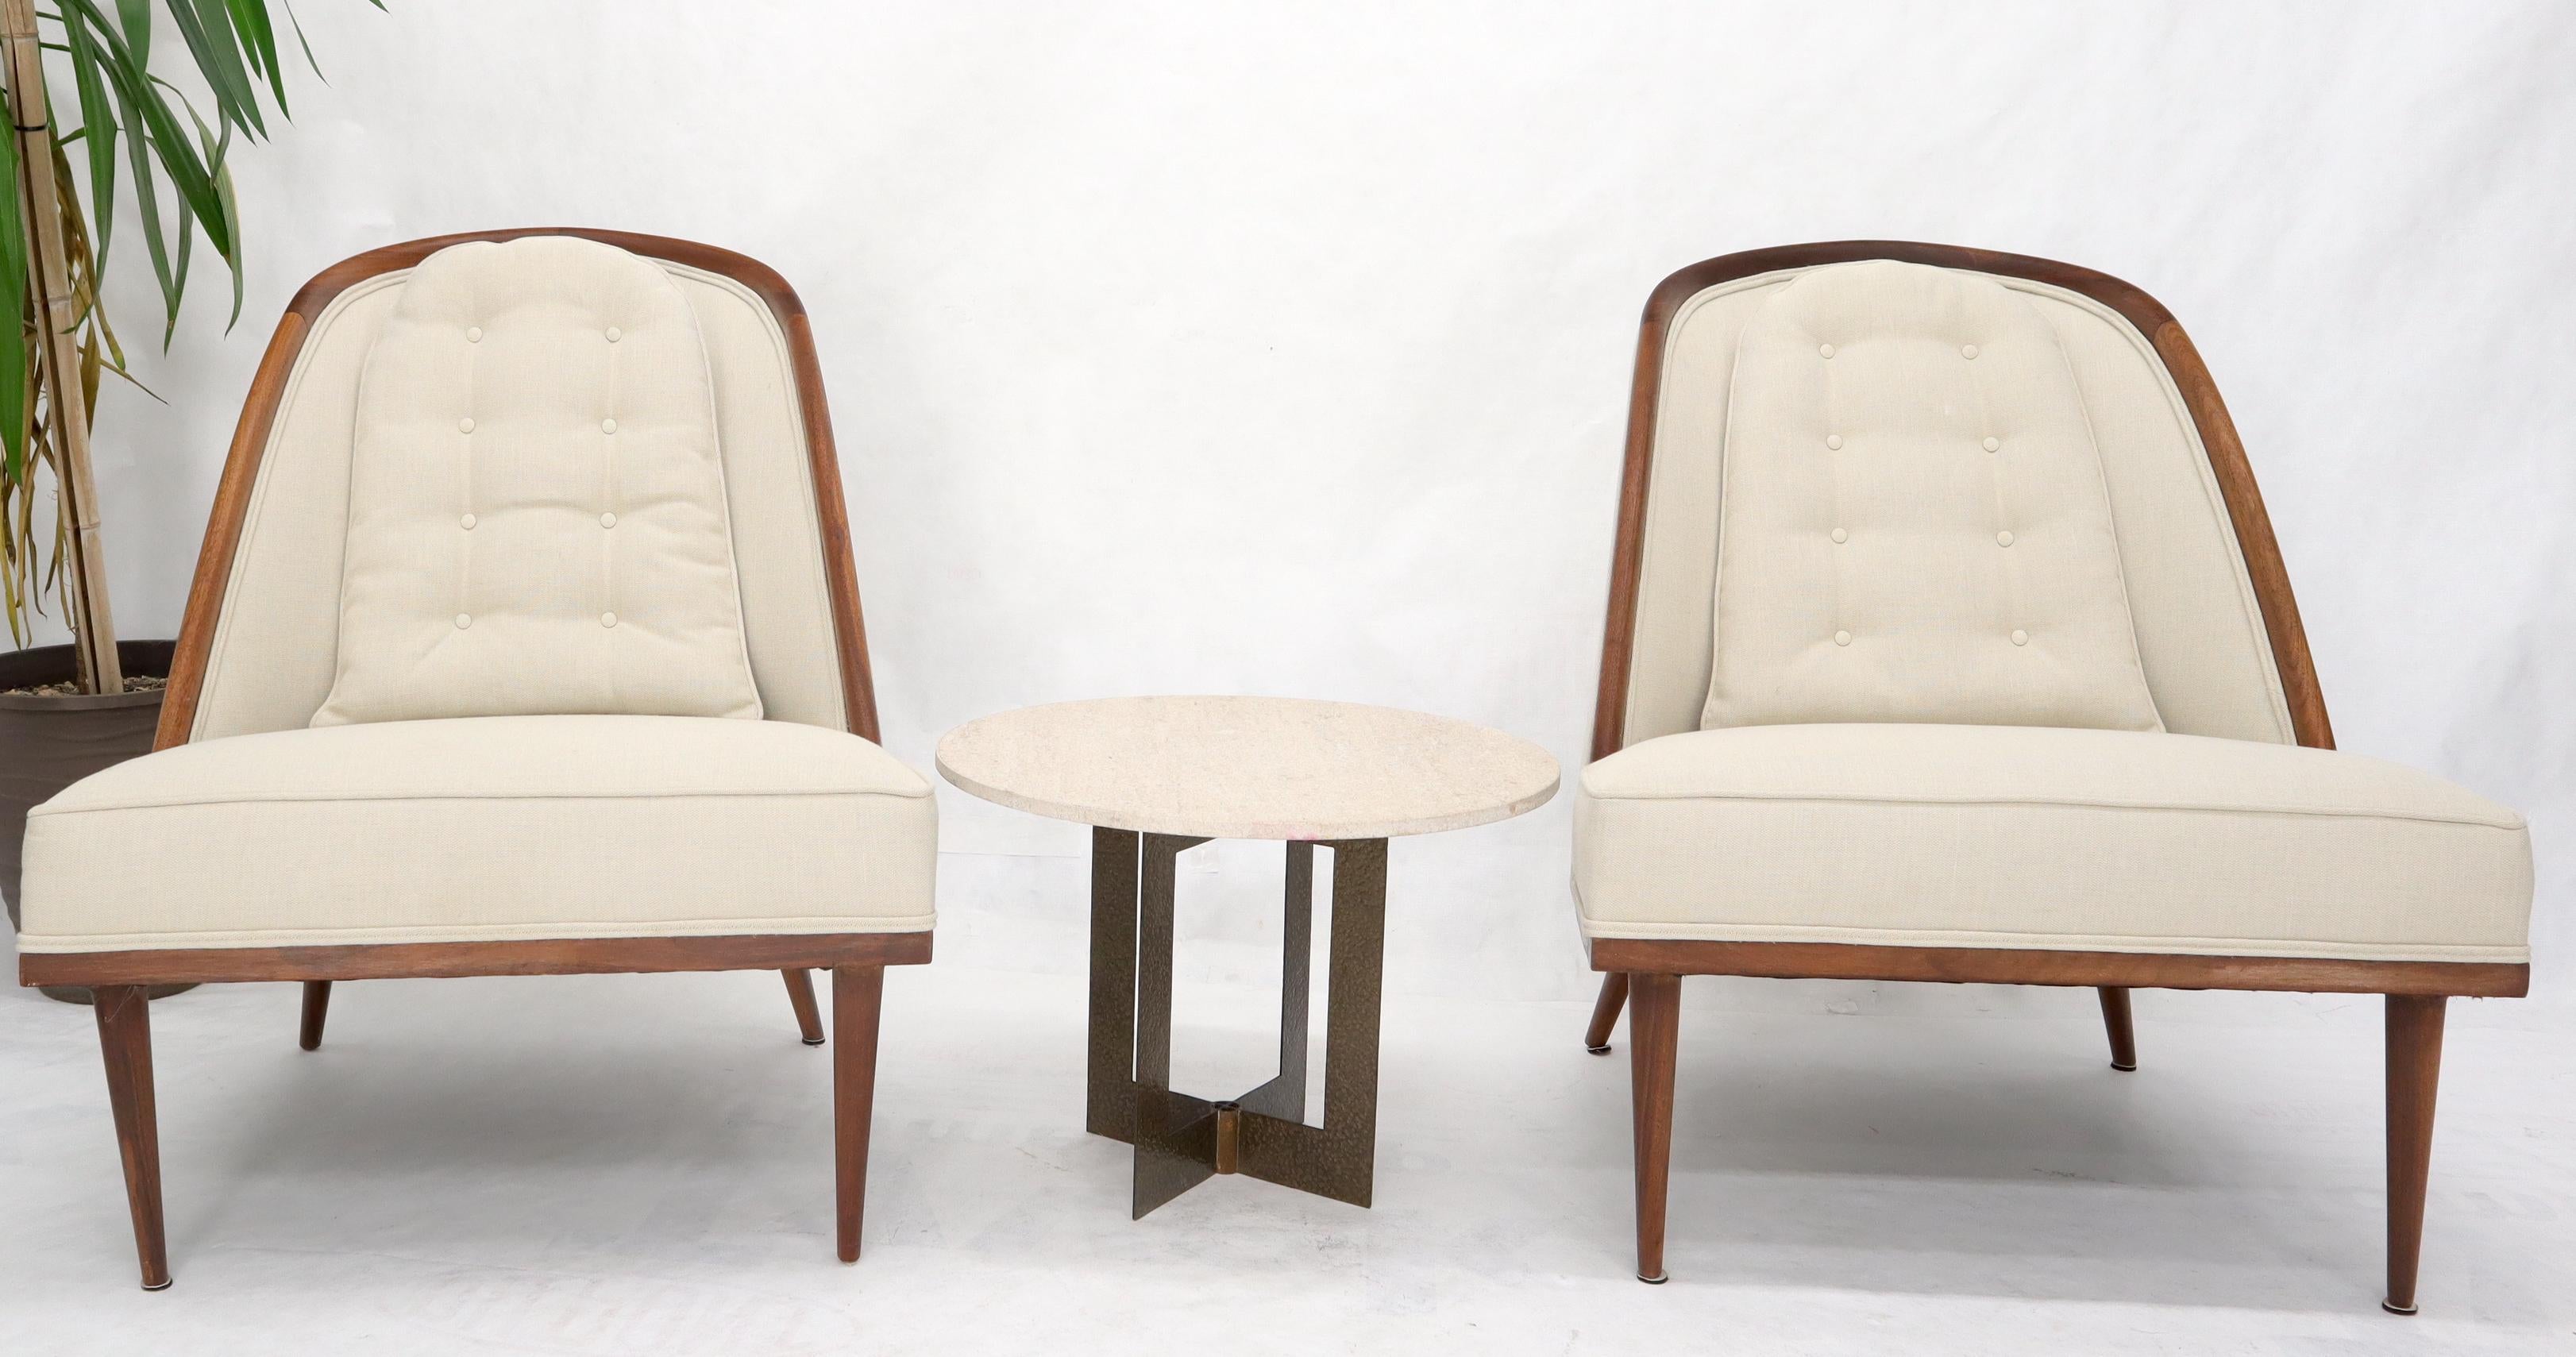 Tongue shape backs oiled walnut frames Mid-Century Modern lounge chairs. Paul McCobb decor match.